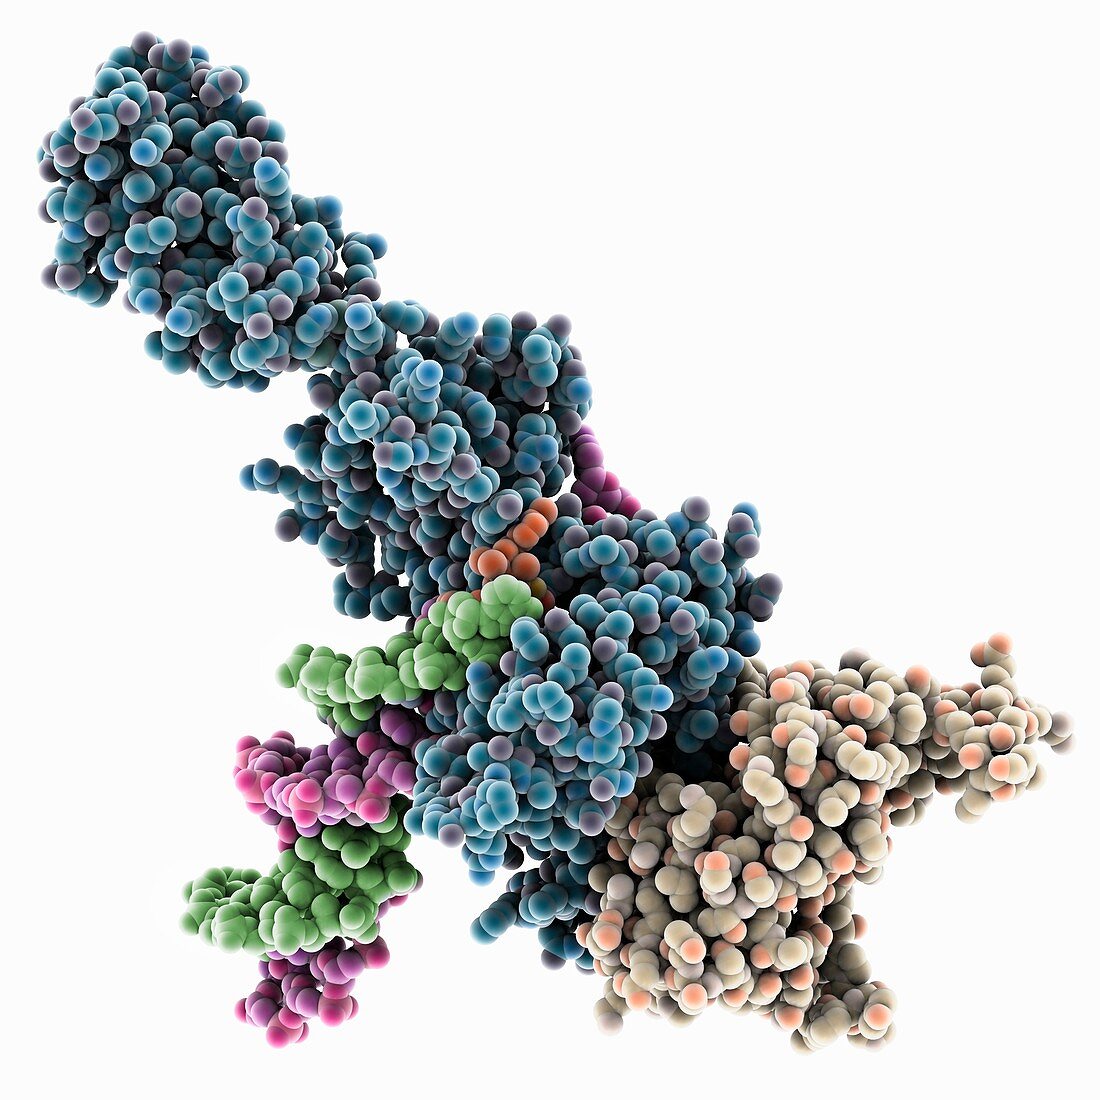 PFV virus integrase DNA complex